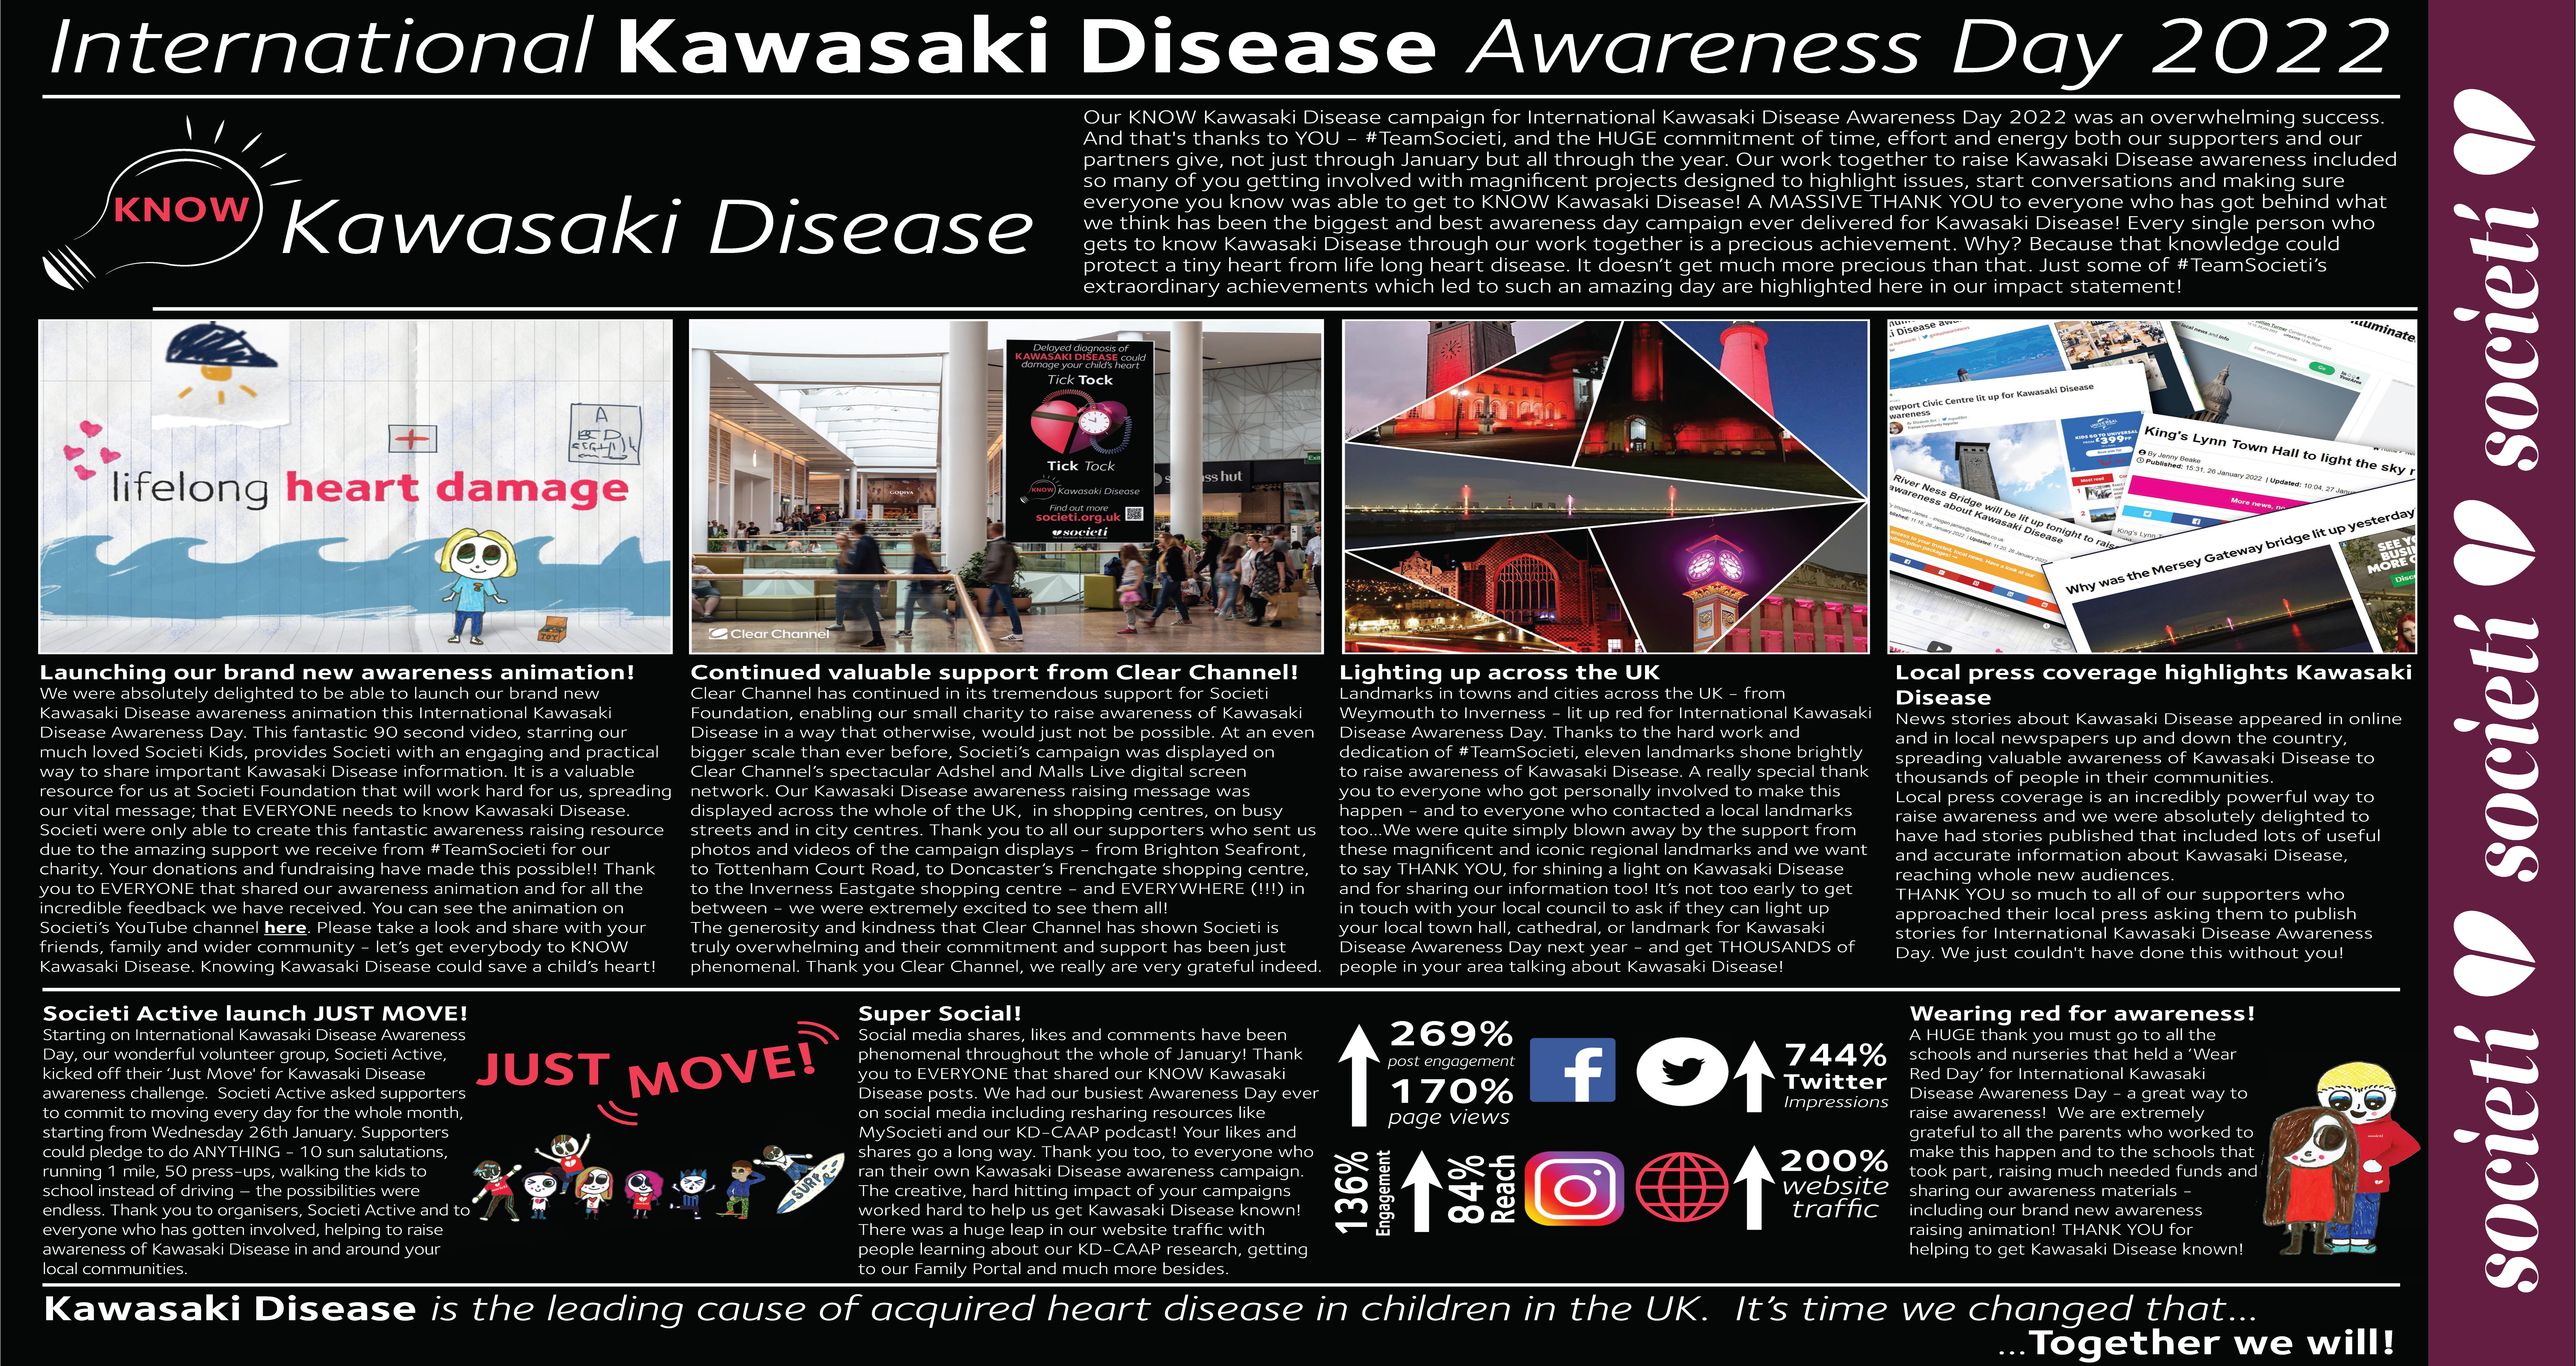 International Kawasaki Disease Awareness Day 2022 Impact Statement